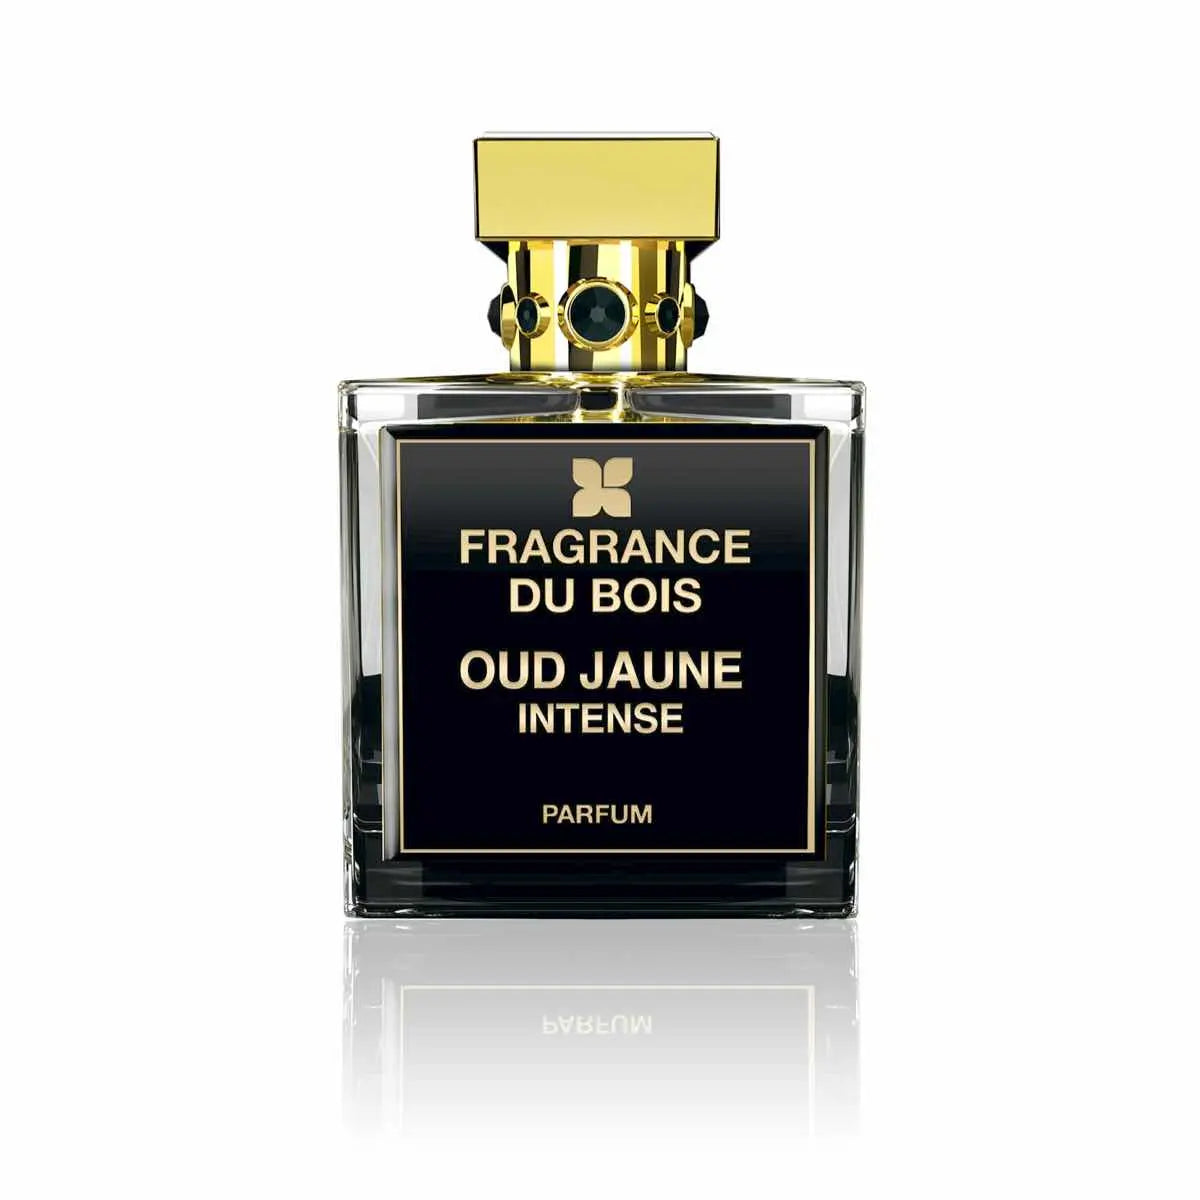 Fragrance du bois Oud Jaune Intense profumo - 100 ml